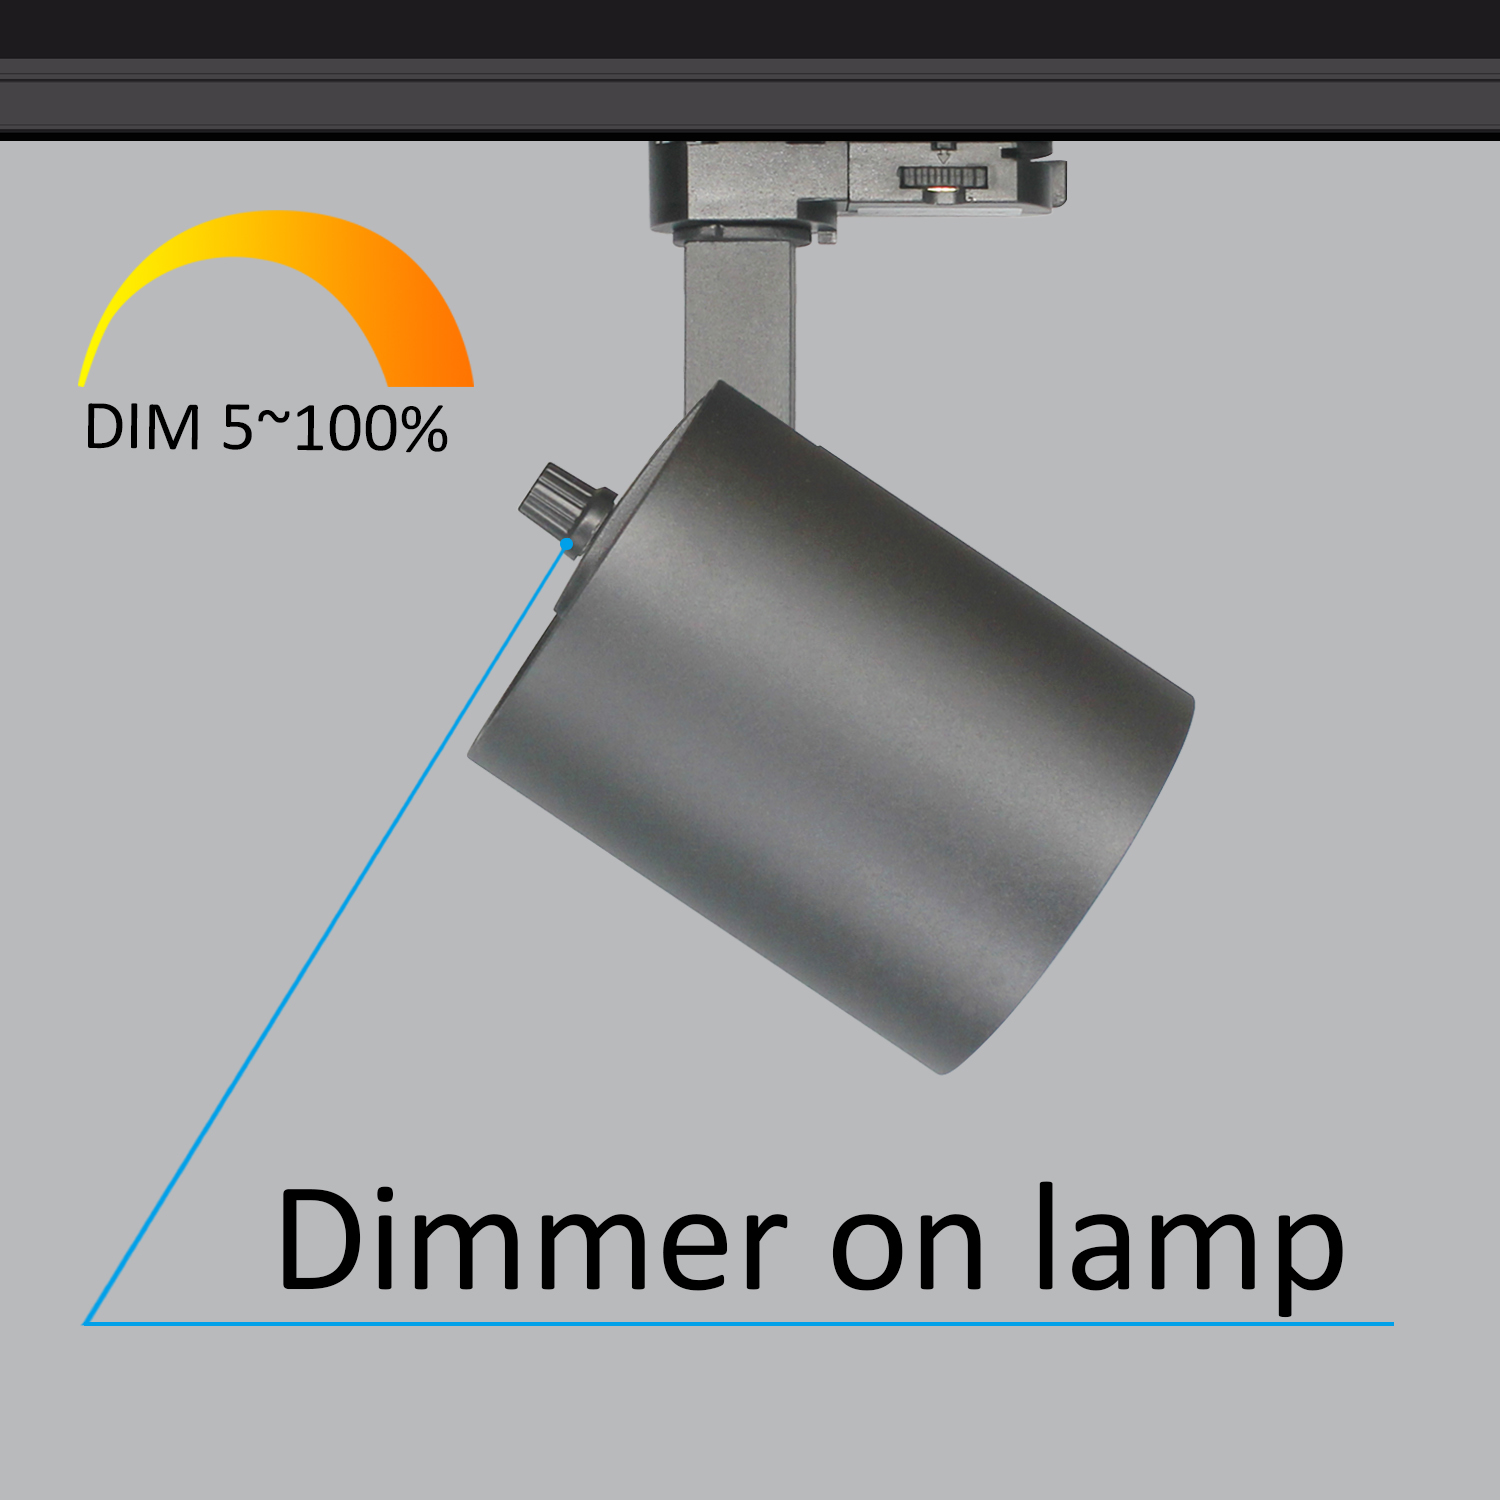 TLU-A Dimmer on Lamp